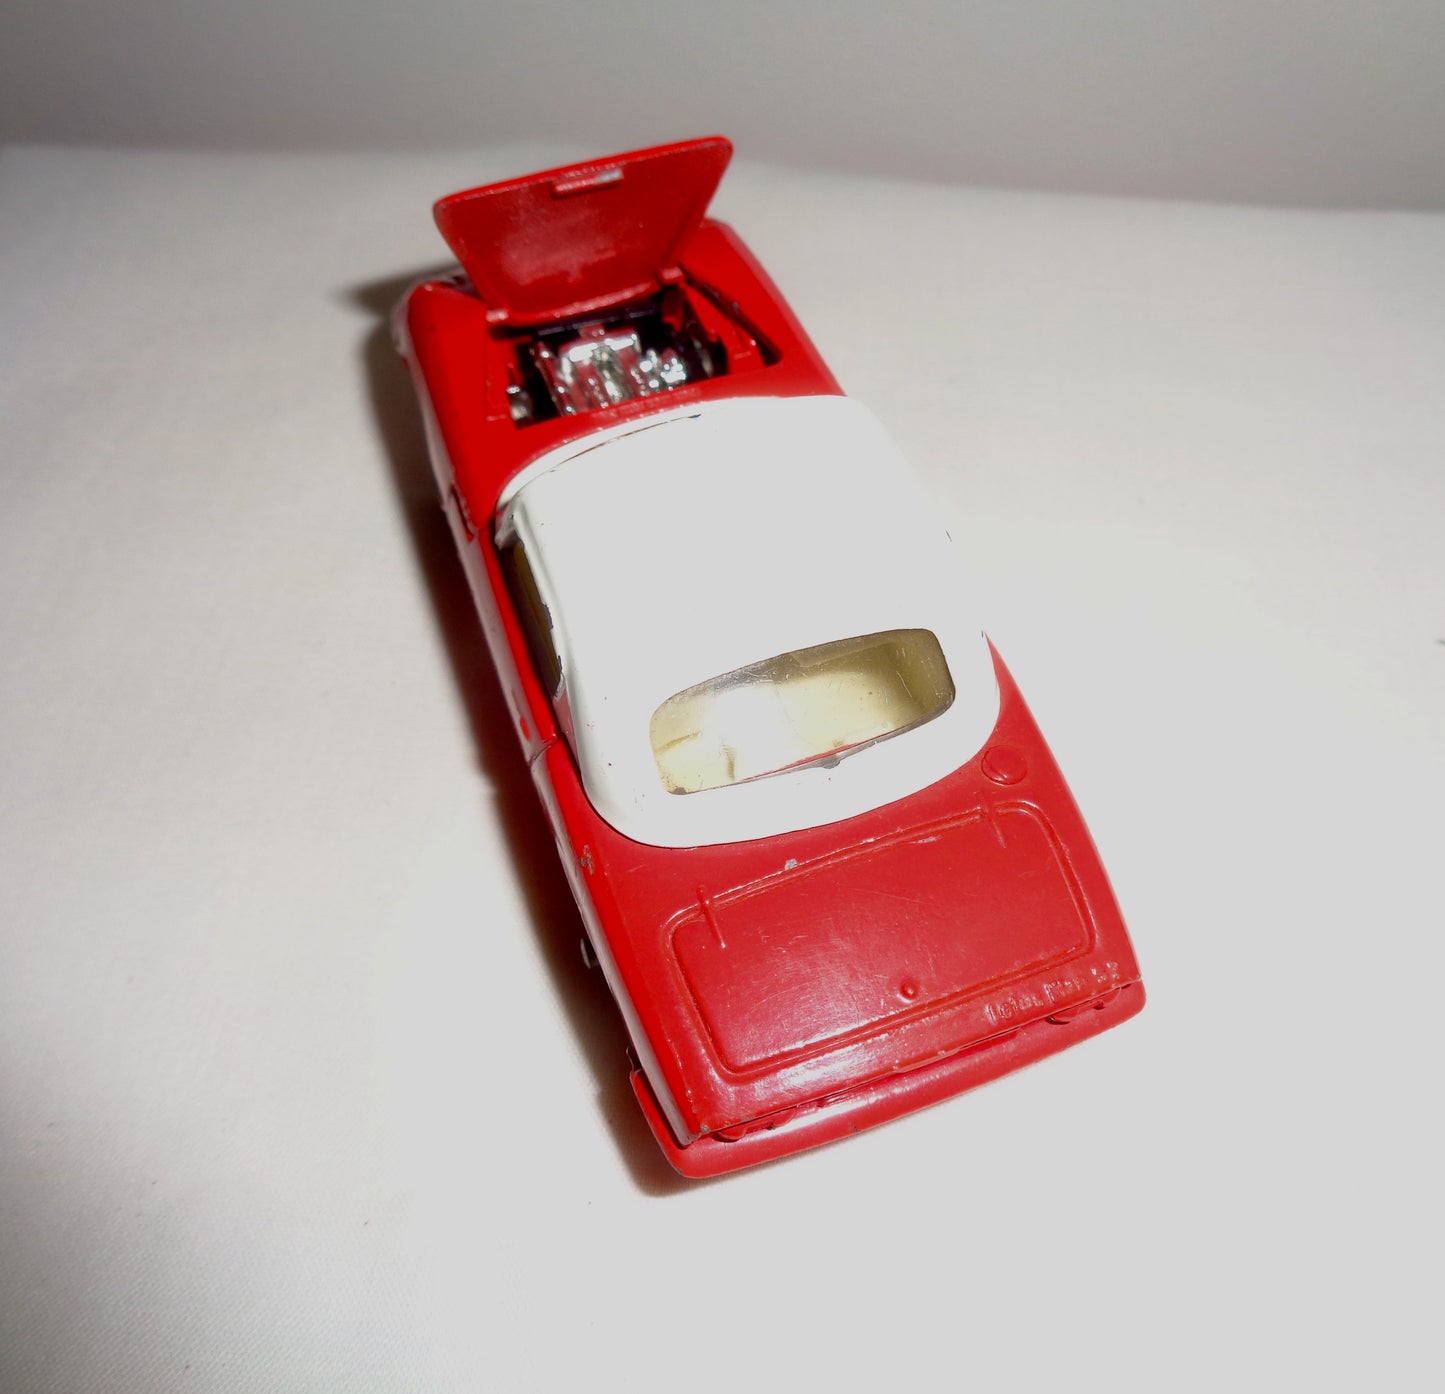 Corgi Toys Model 319 Lotus Elan S2 Hardtop Coupe In Red and White